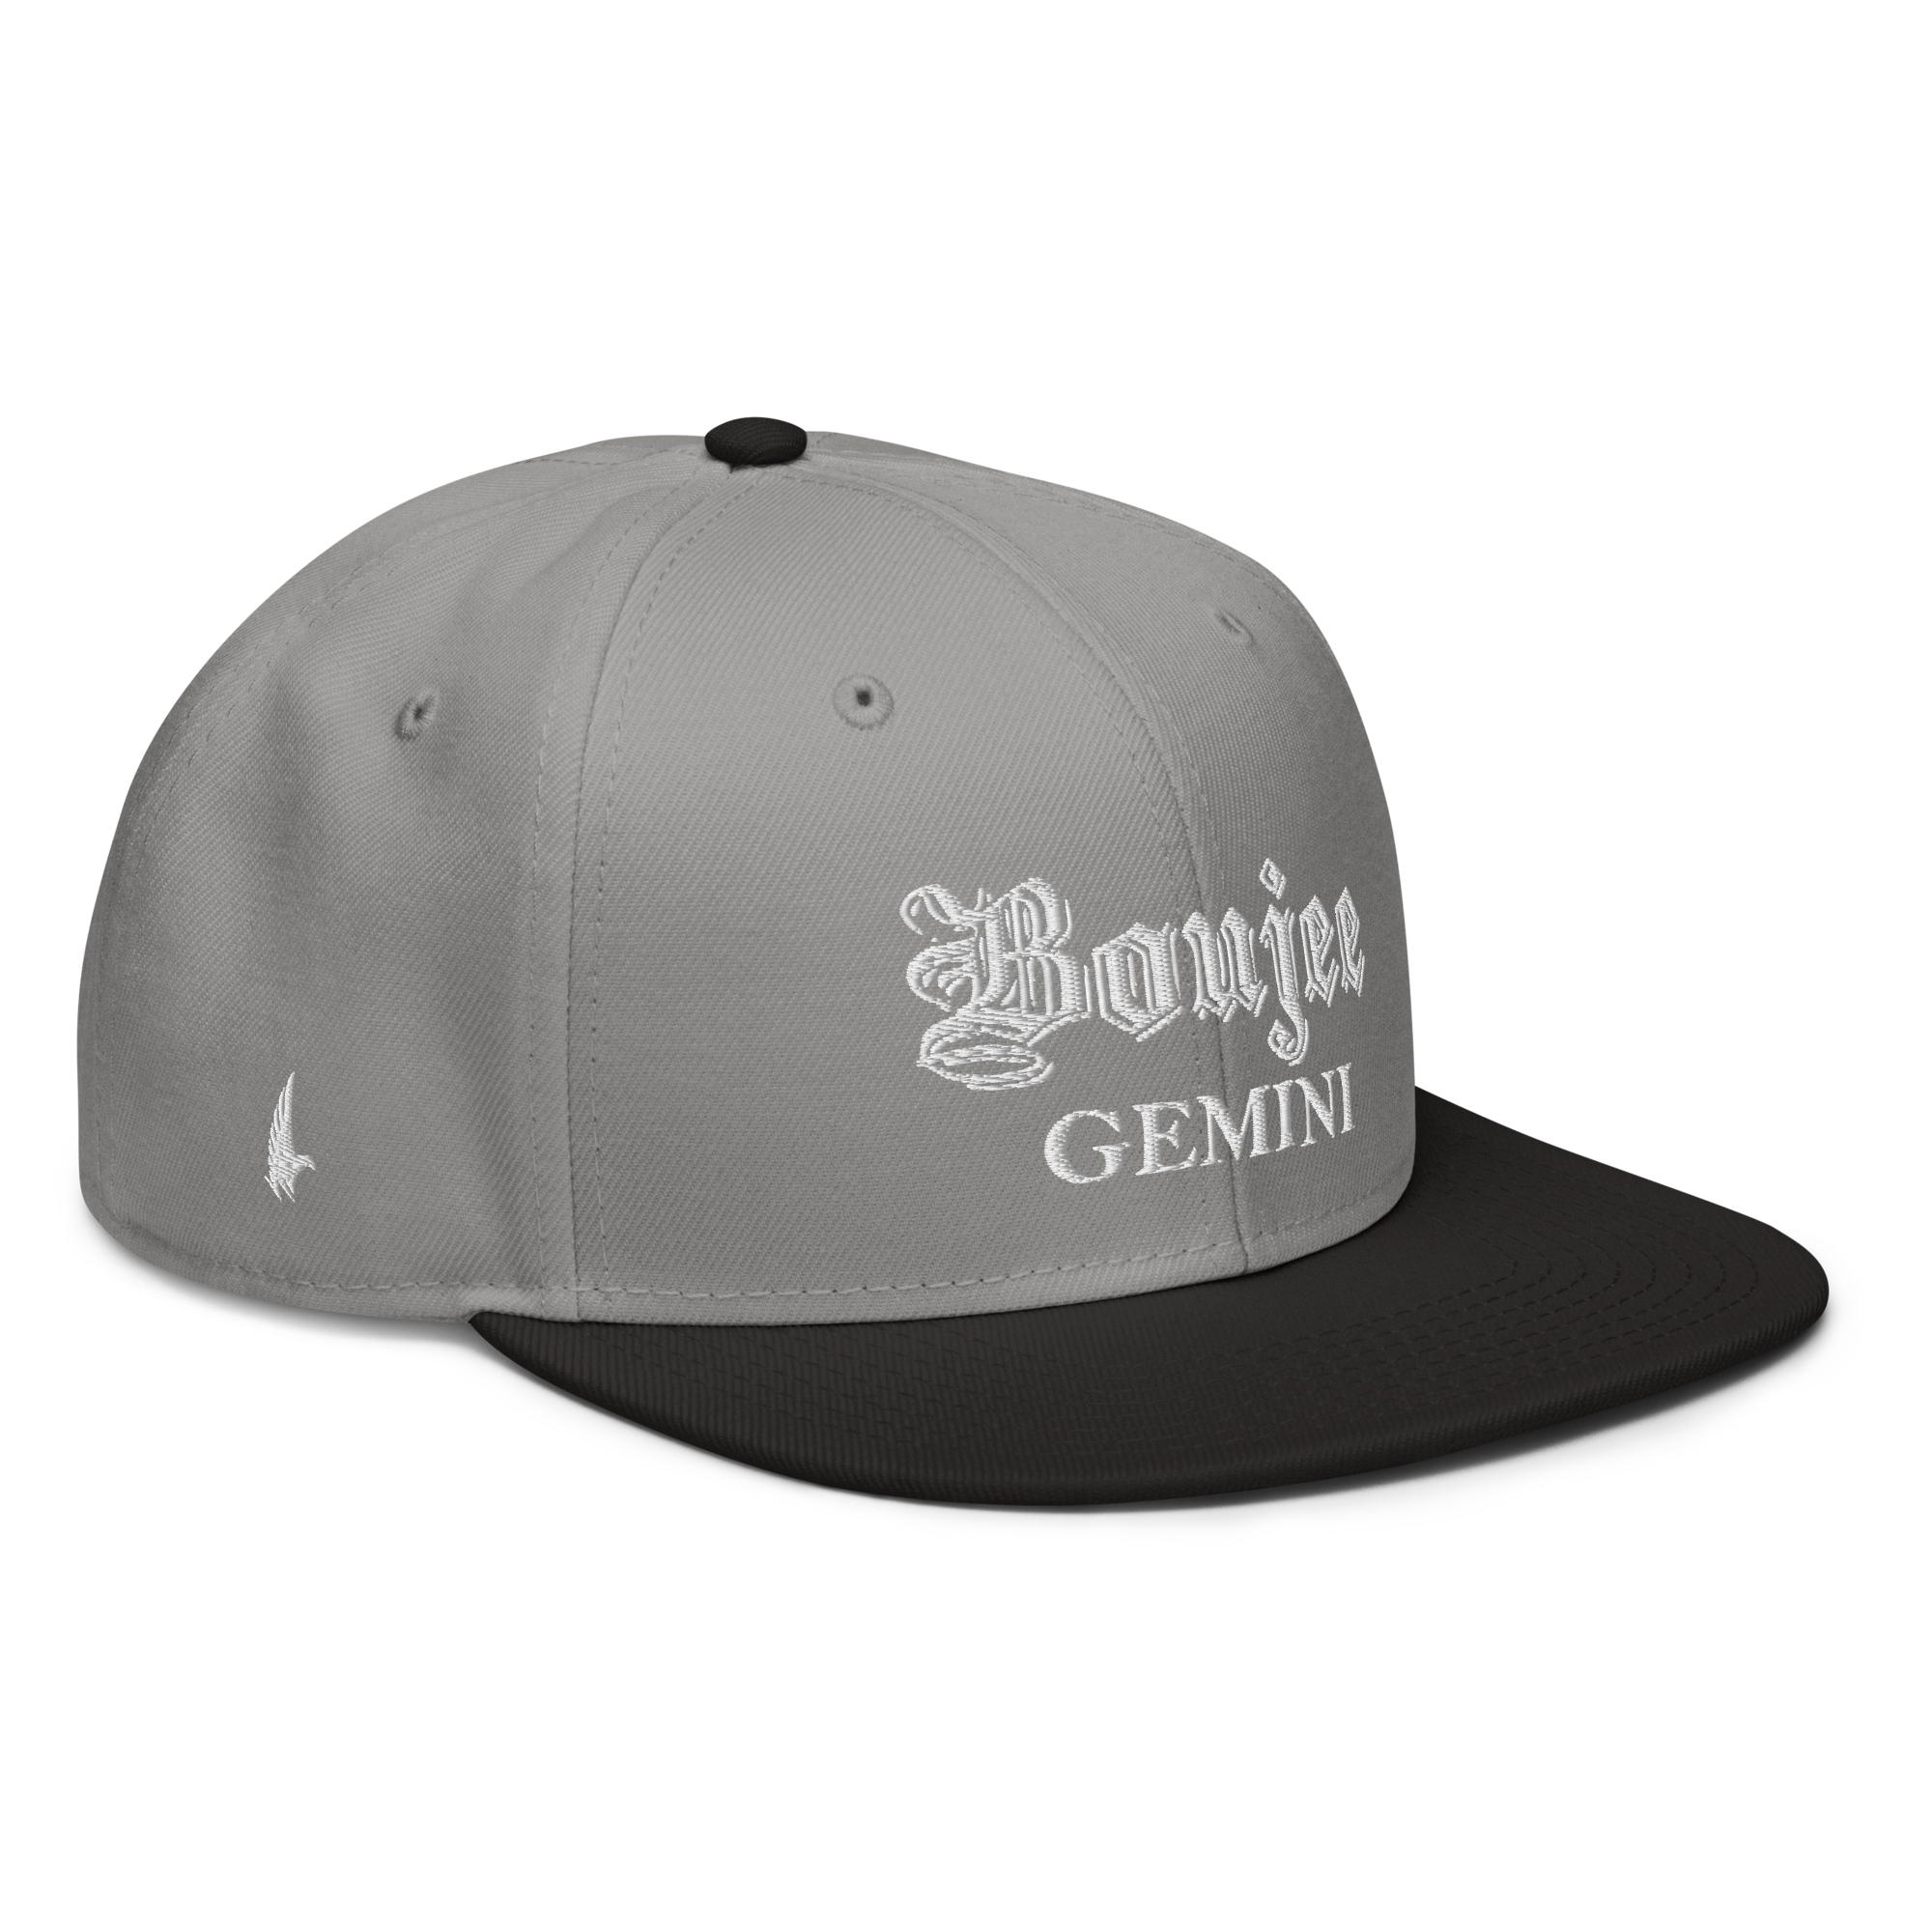 Boujee Gemini Snapback Hat - Gray/White/Black - Loyalty Vibes